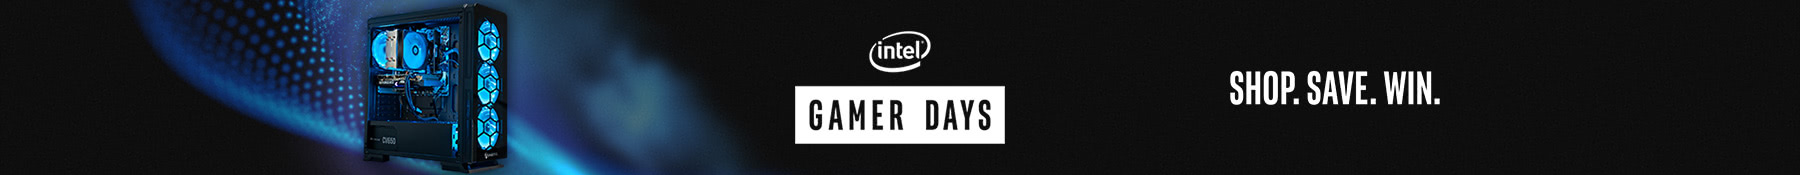 Intel Gamer Days - Shop. Save. Win.